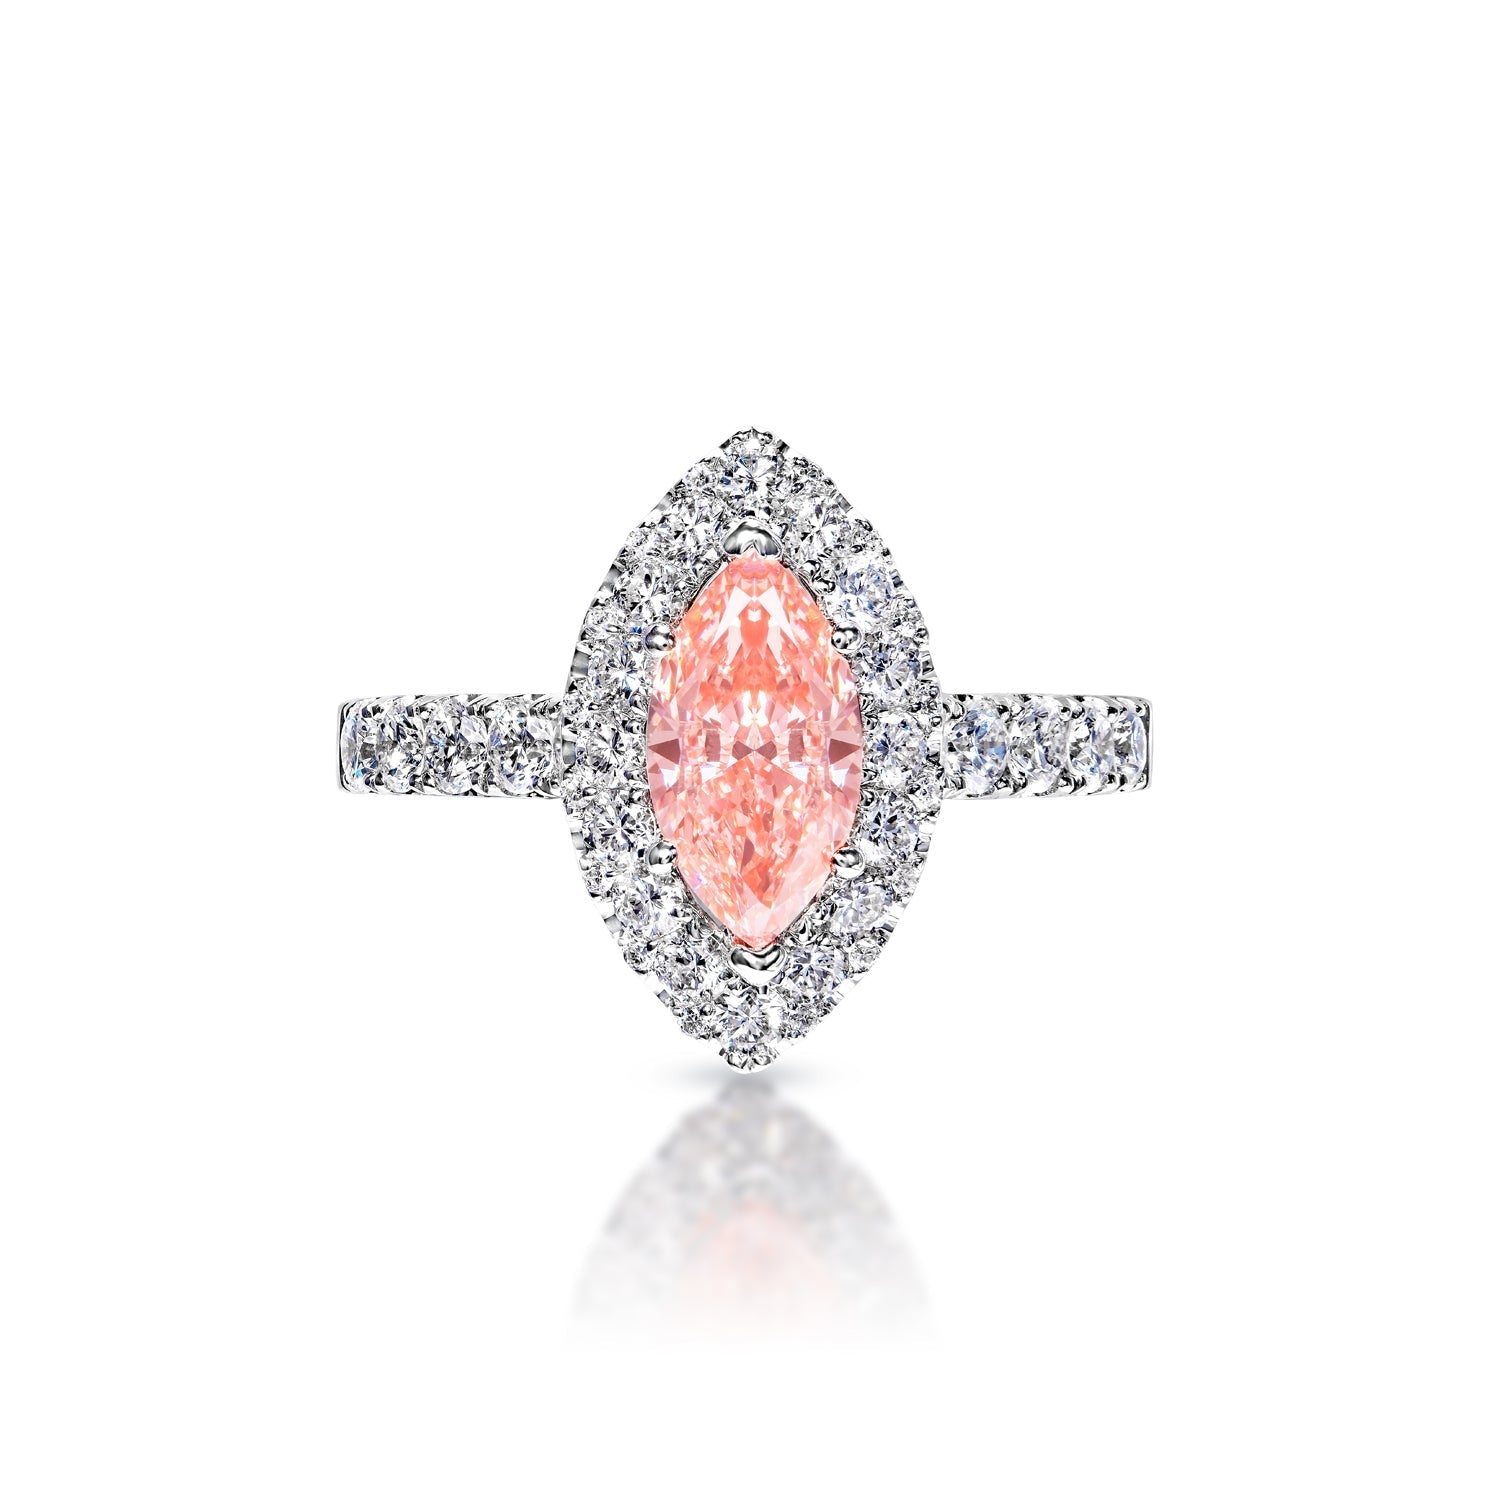 Noemi 2 Carat Fancy Vivid Pink VS1 Marquise Cut Diamond Engagement Ring in  18k White Gold